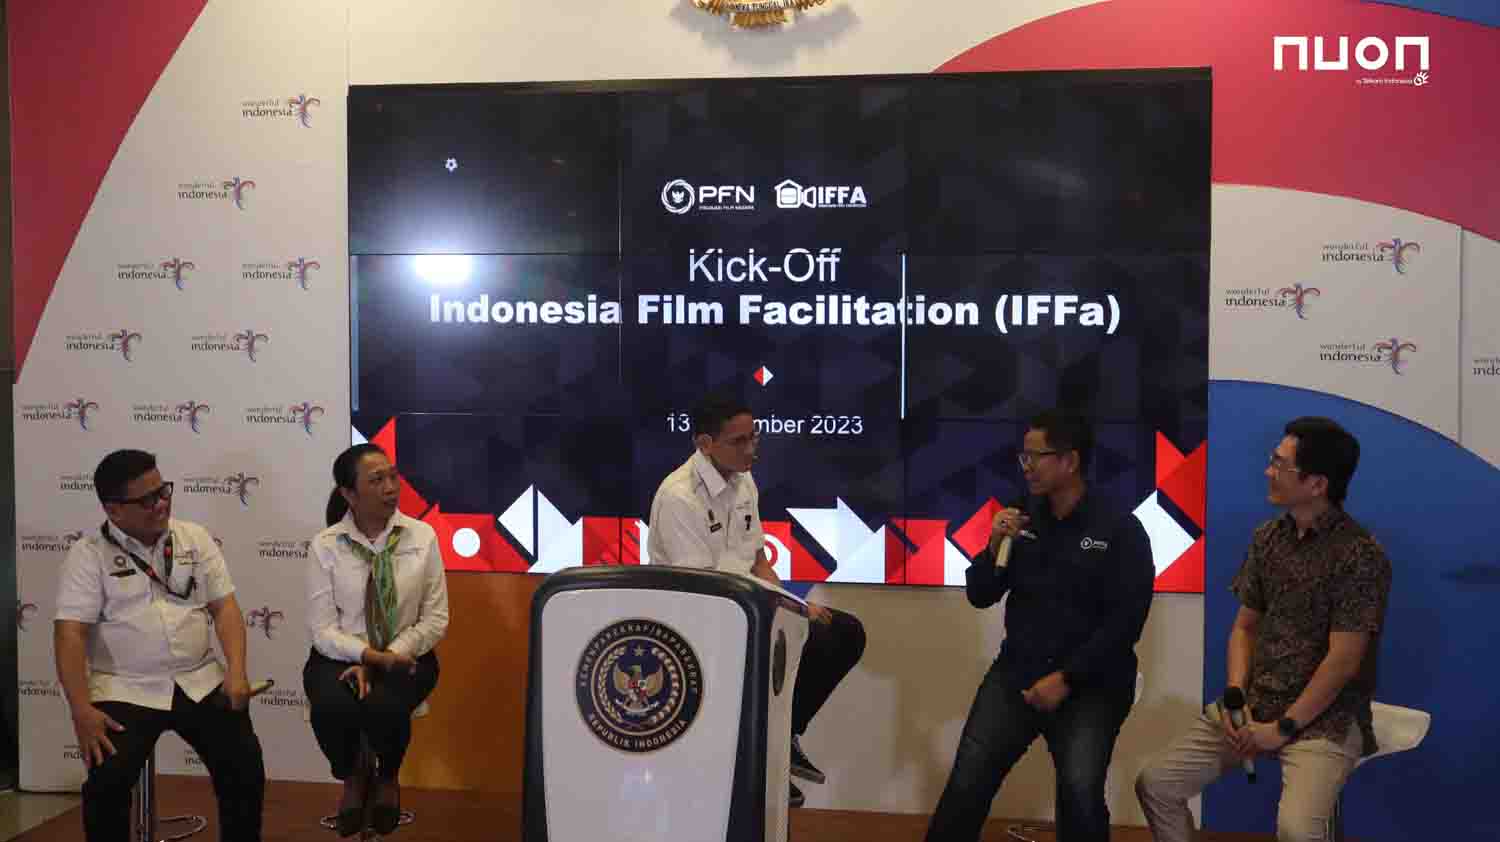 Nuon Bersama PFN Dukung Geliat Industri Perfilman Indonesia Lewat IFFa (Indonesia Film Facilitation)